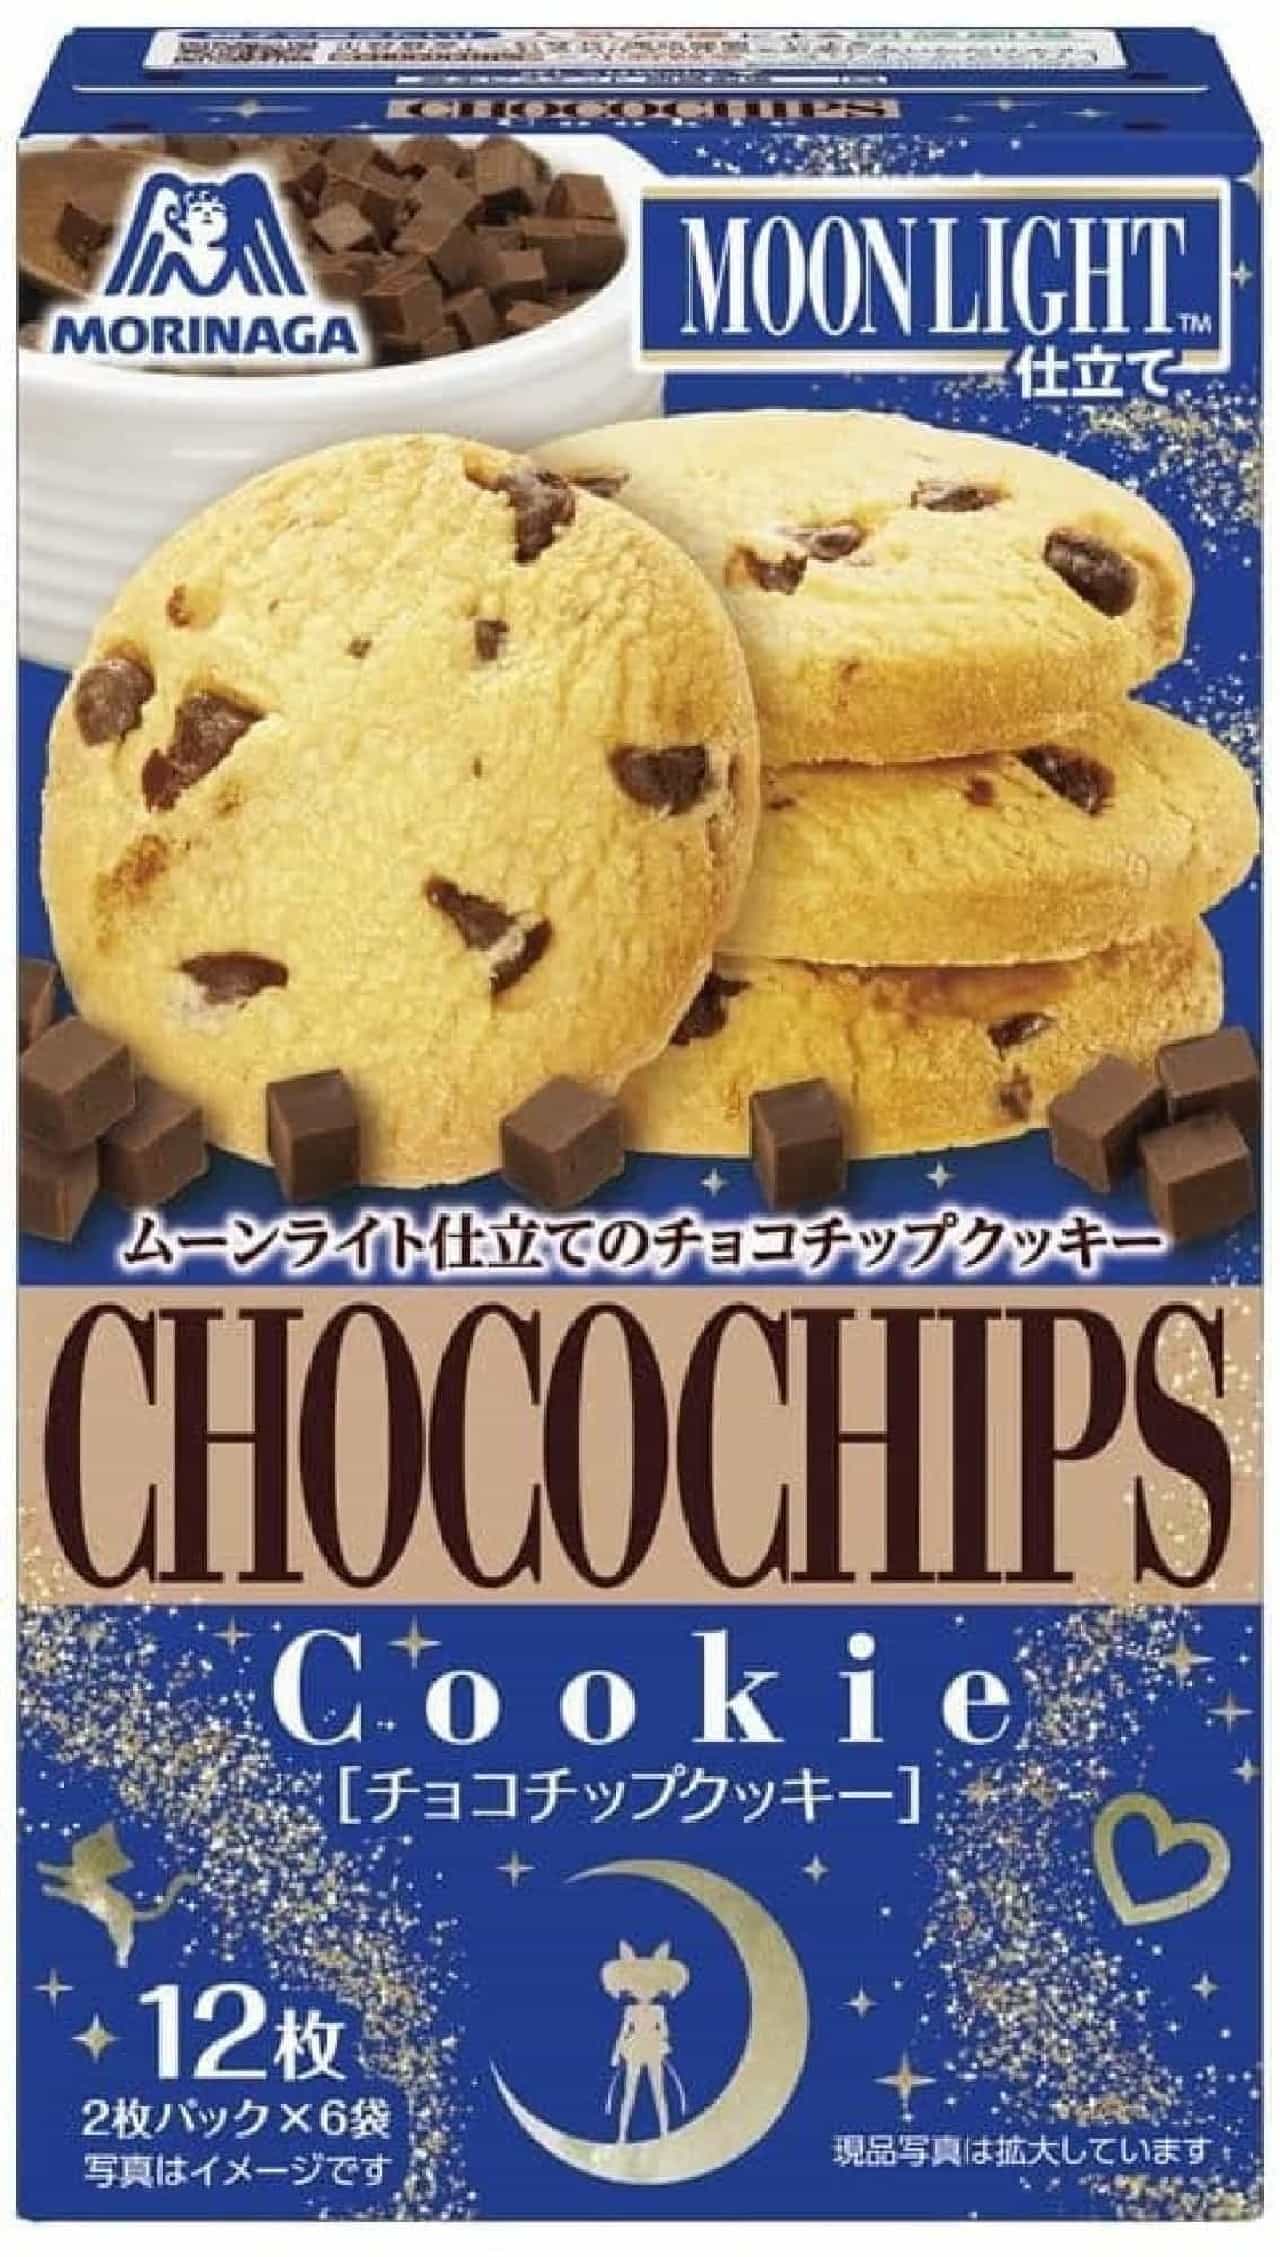 Moonlight chocolate chip cookies